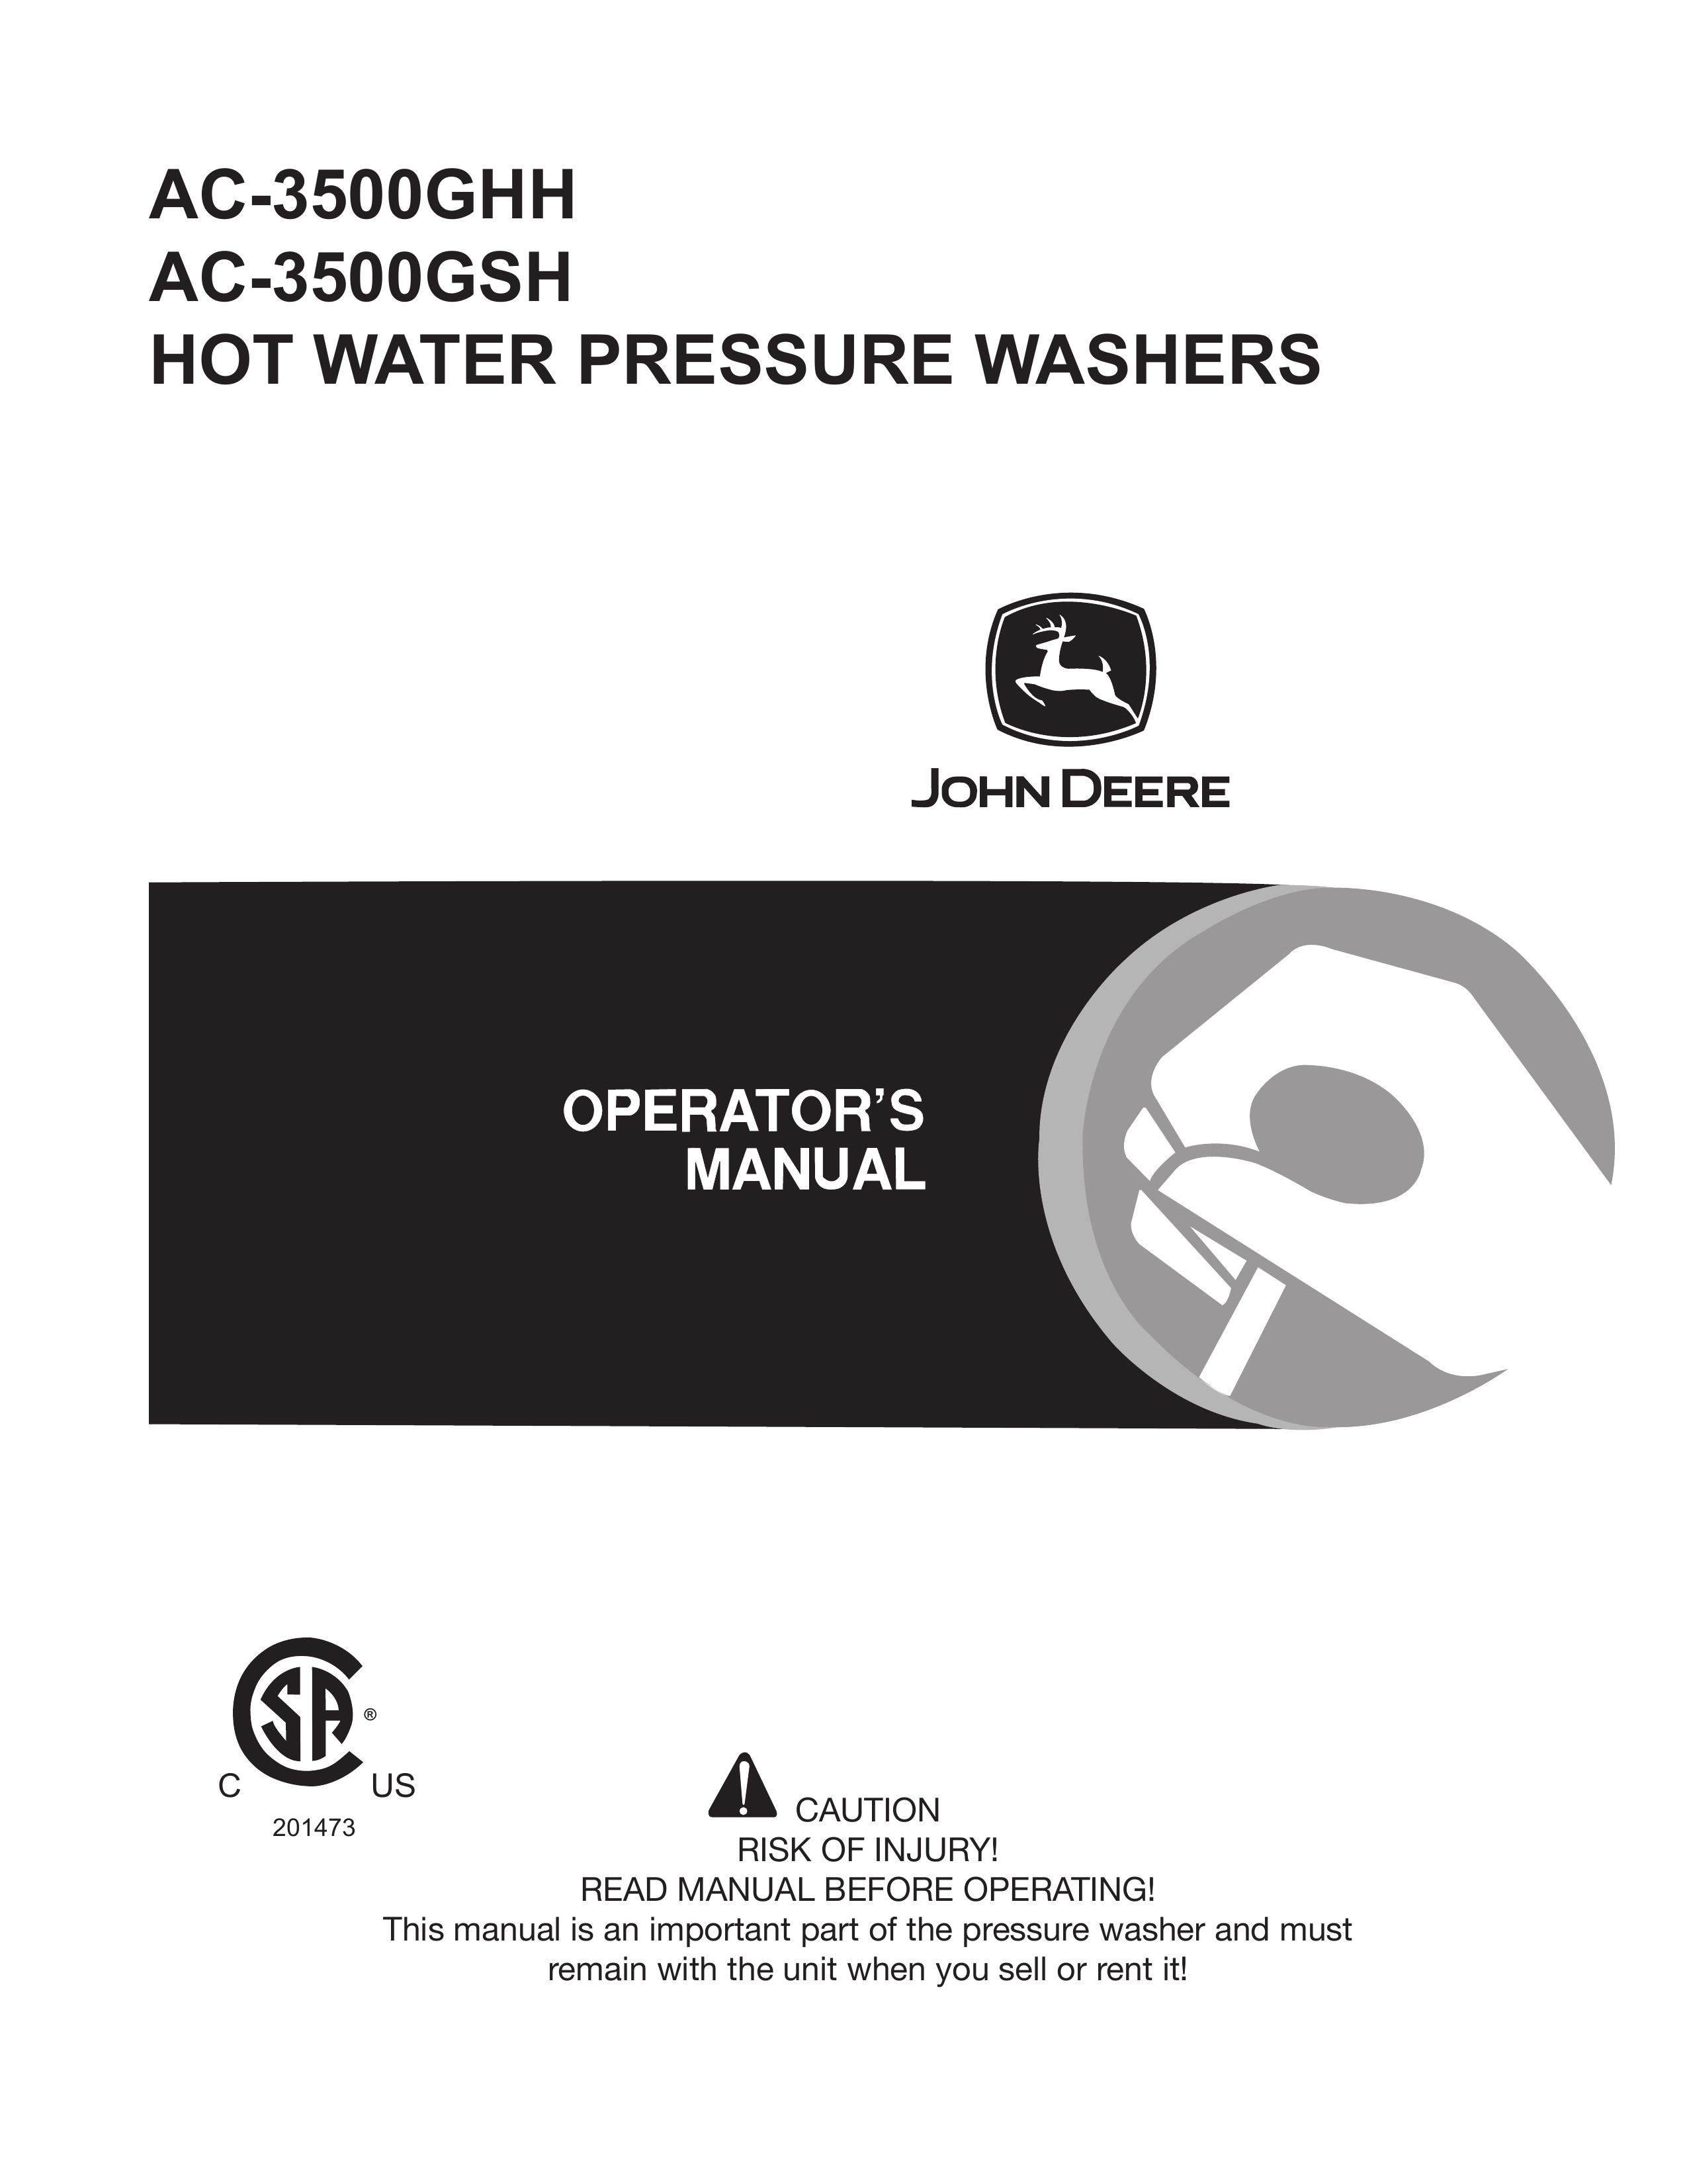 John Deere AC-3500GSH Pressure Washer User Manual